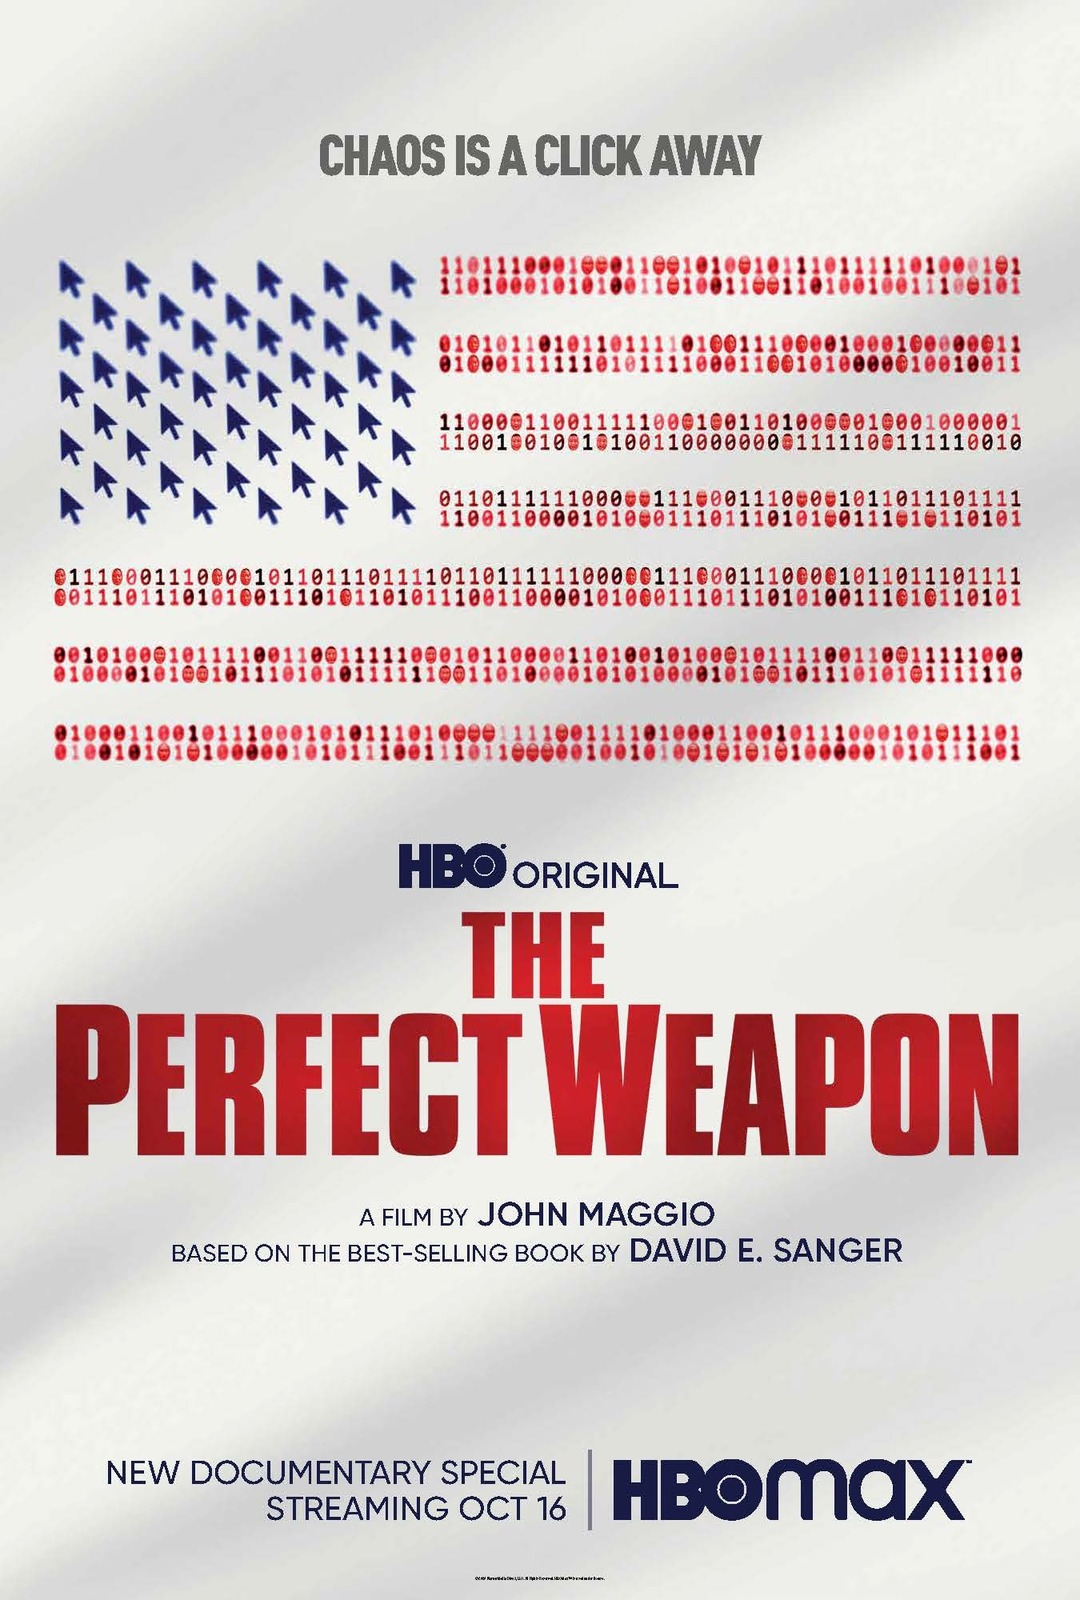 The Perfect Weapon Poster John Maggio Documentary Art Film Print 24x36 27x40